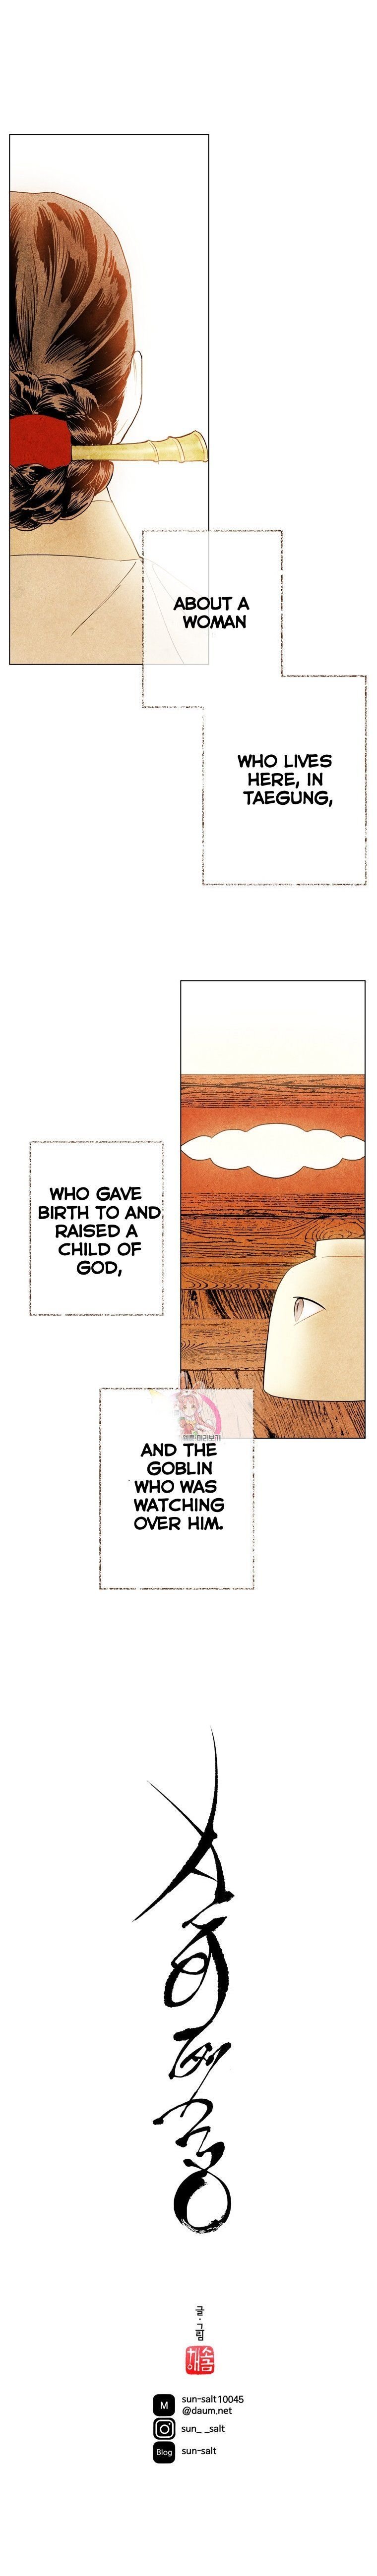 God’s Palace Chapter 0 - Page 4